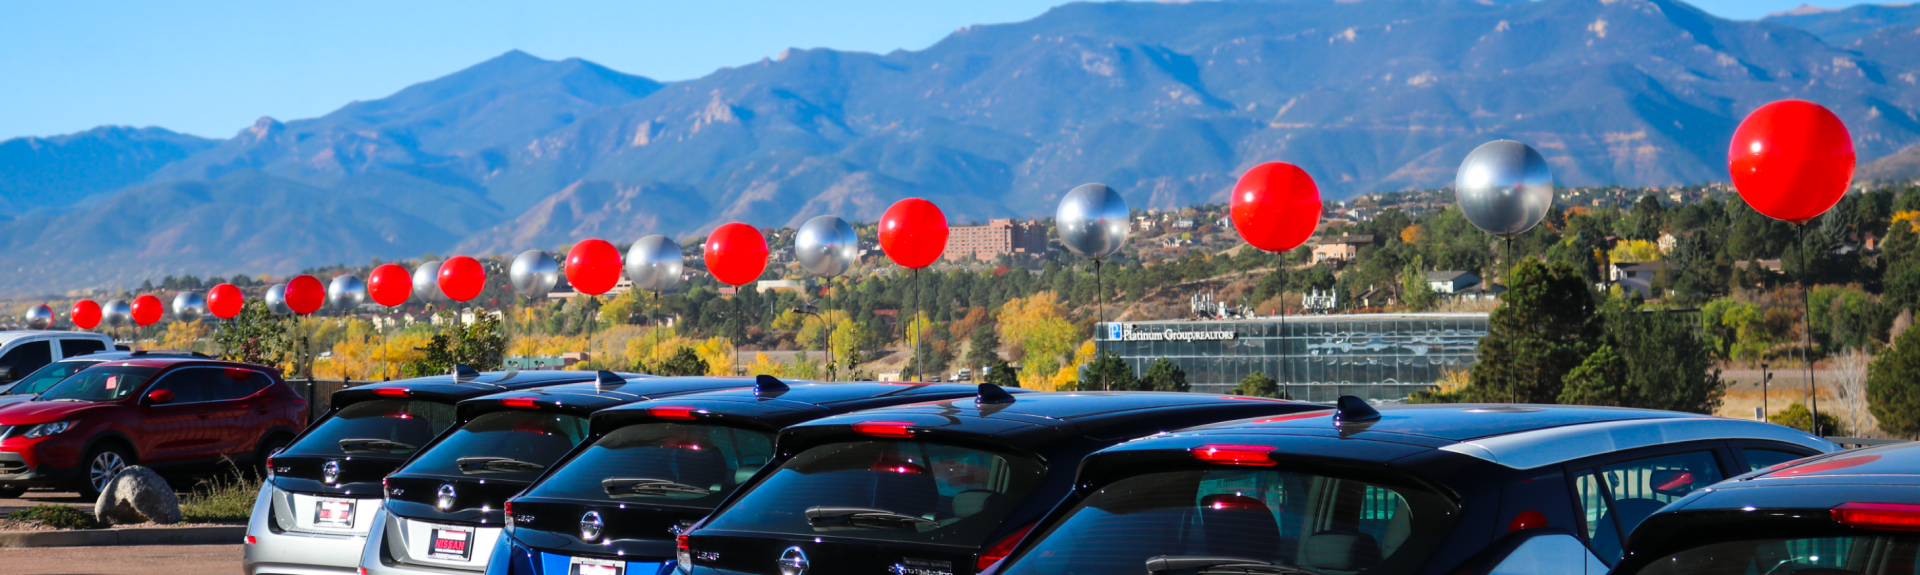 Car Dealership Balloons